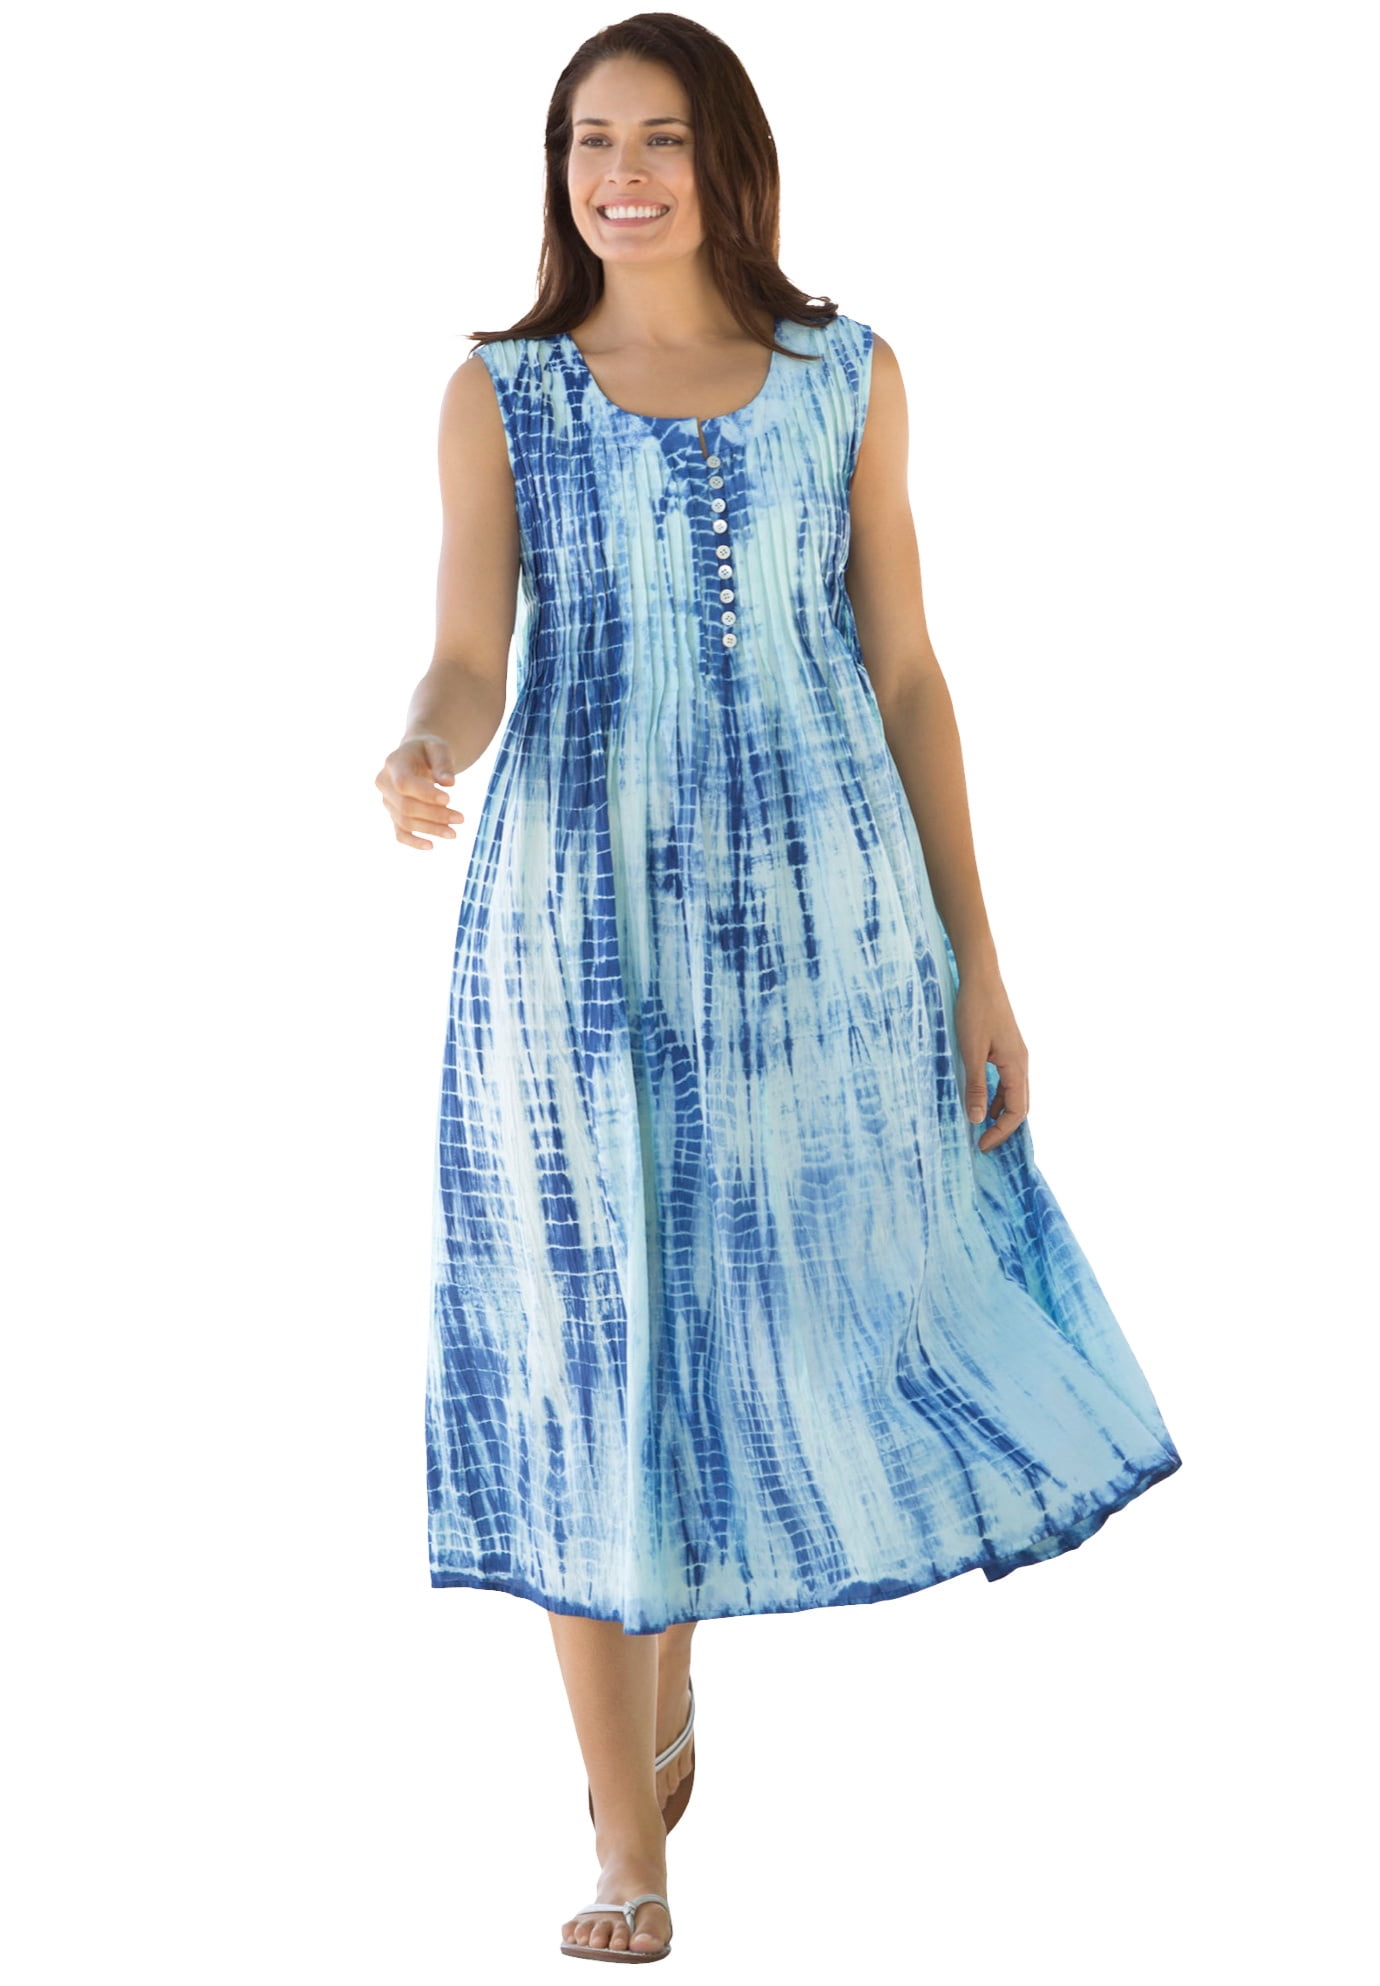 MISYAA Womens Plus Size Midi Dresses Tie-Dye Gradient Short Sleeve Knee Length Casual Dress Beach Sundress Boho Paisley S-5XL 